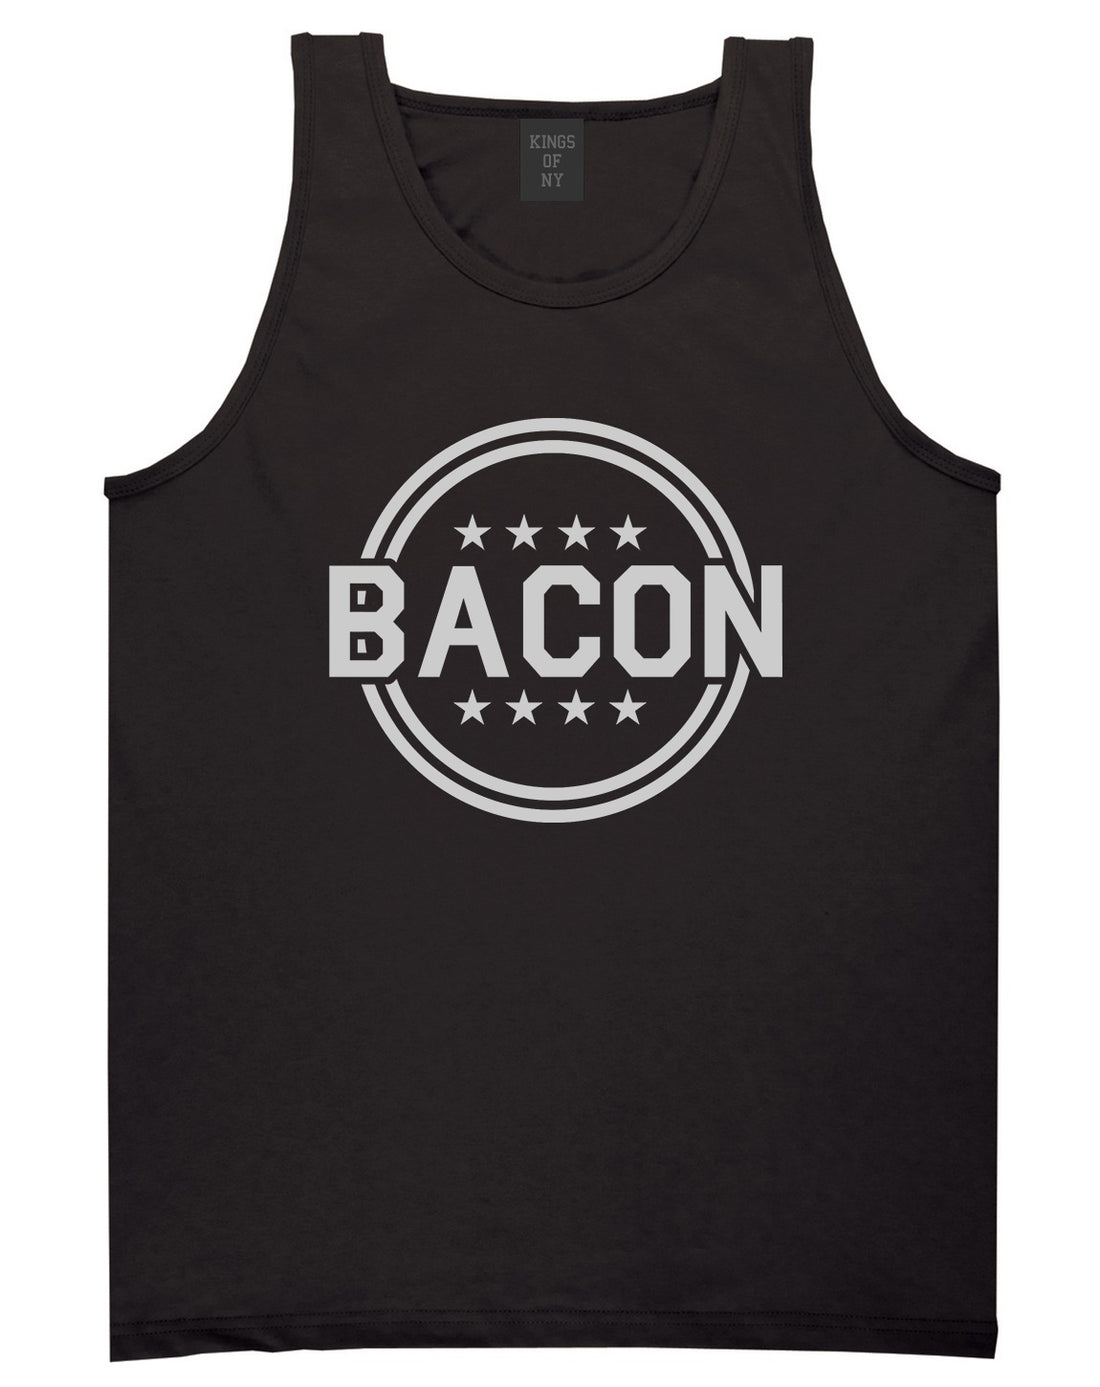 Bacon Stars Black Tank Top Shirt by Kings Of NY